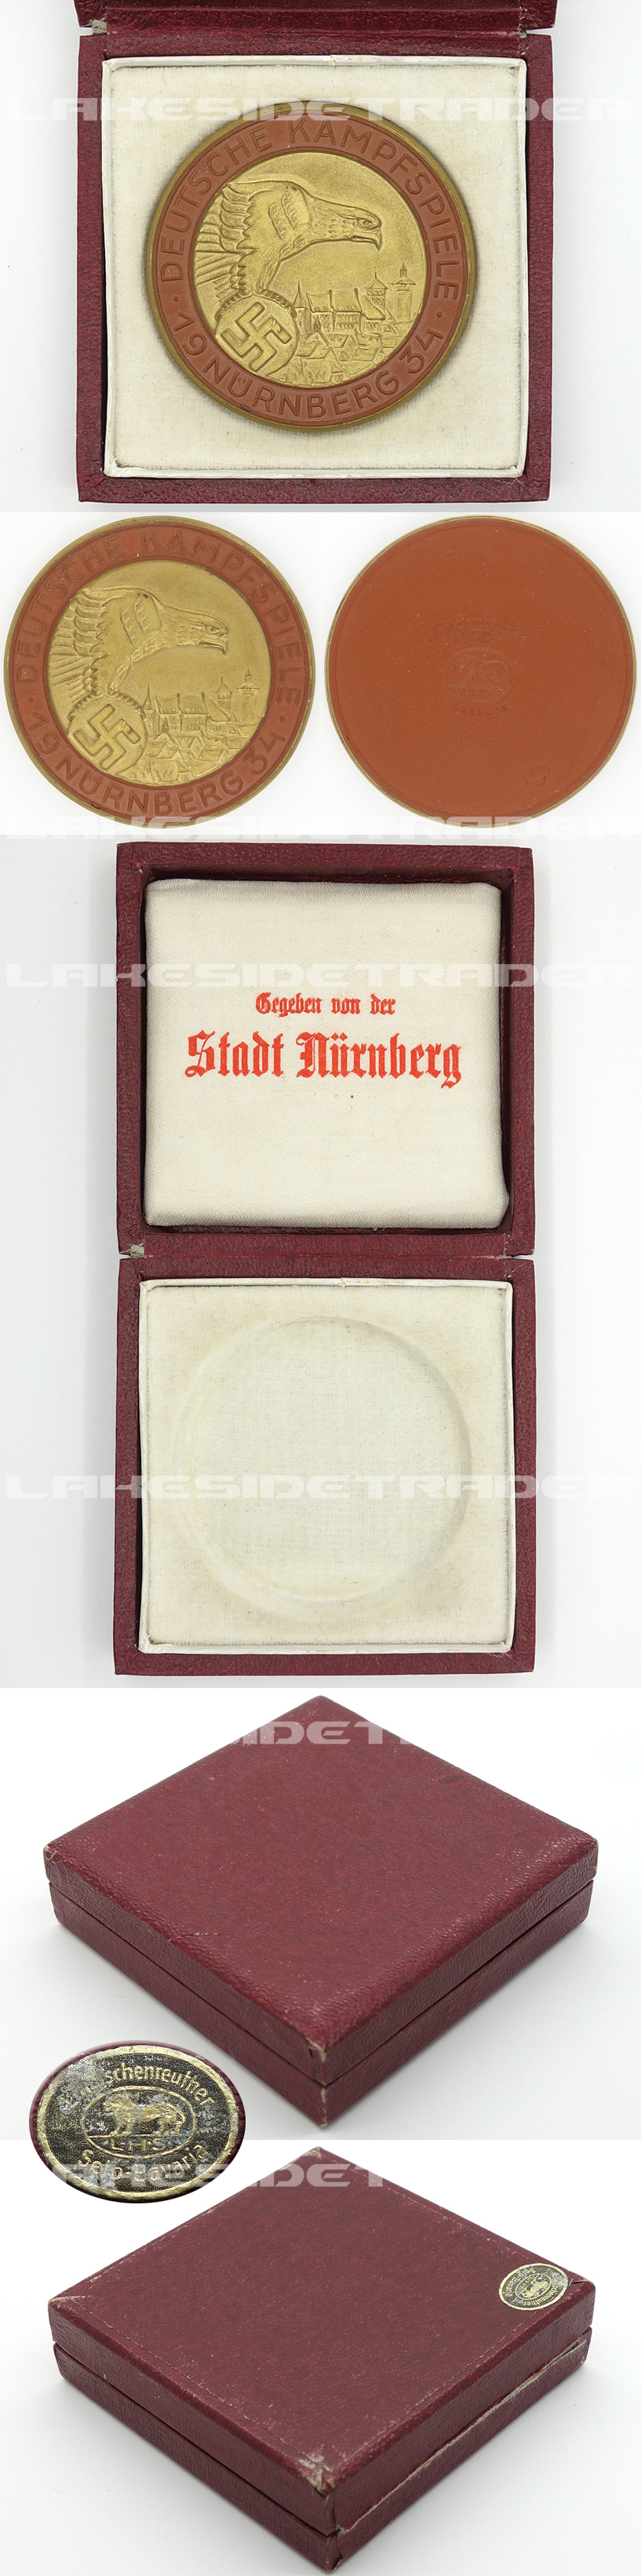 “Deutsche Kampfspiele Nürnberg 1934” Table Medal